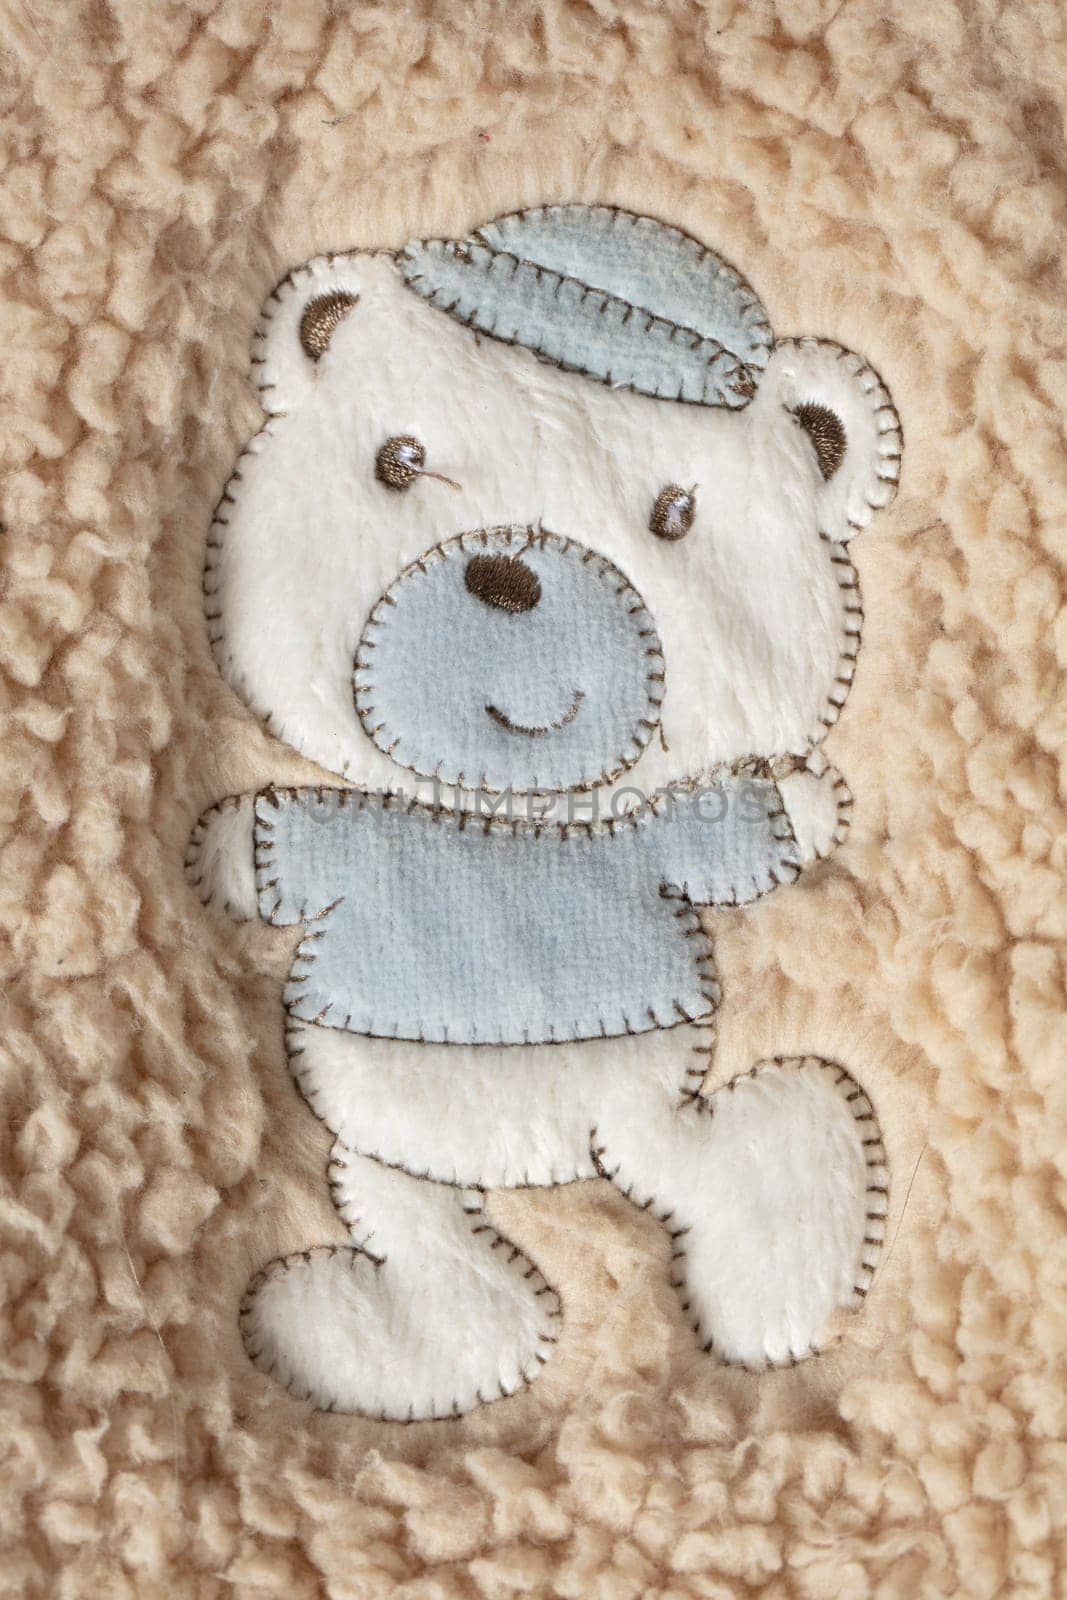 On the fur is a fabric application of a cute teddy bear. by Sviatlana